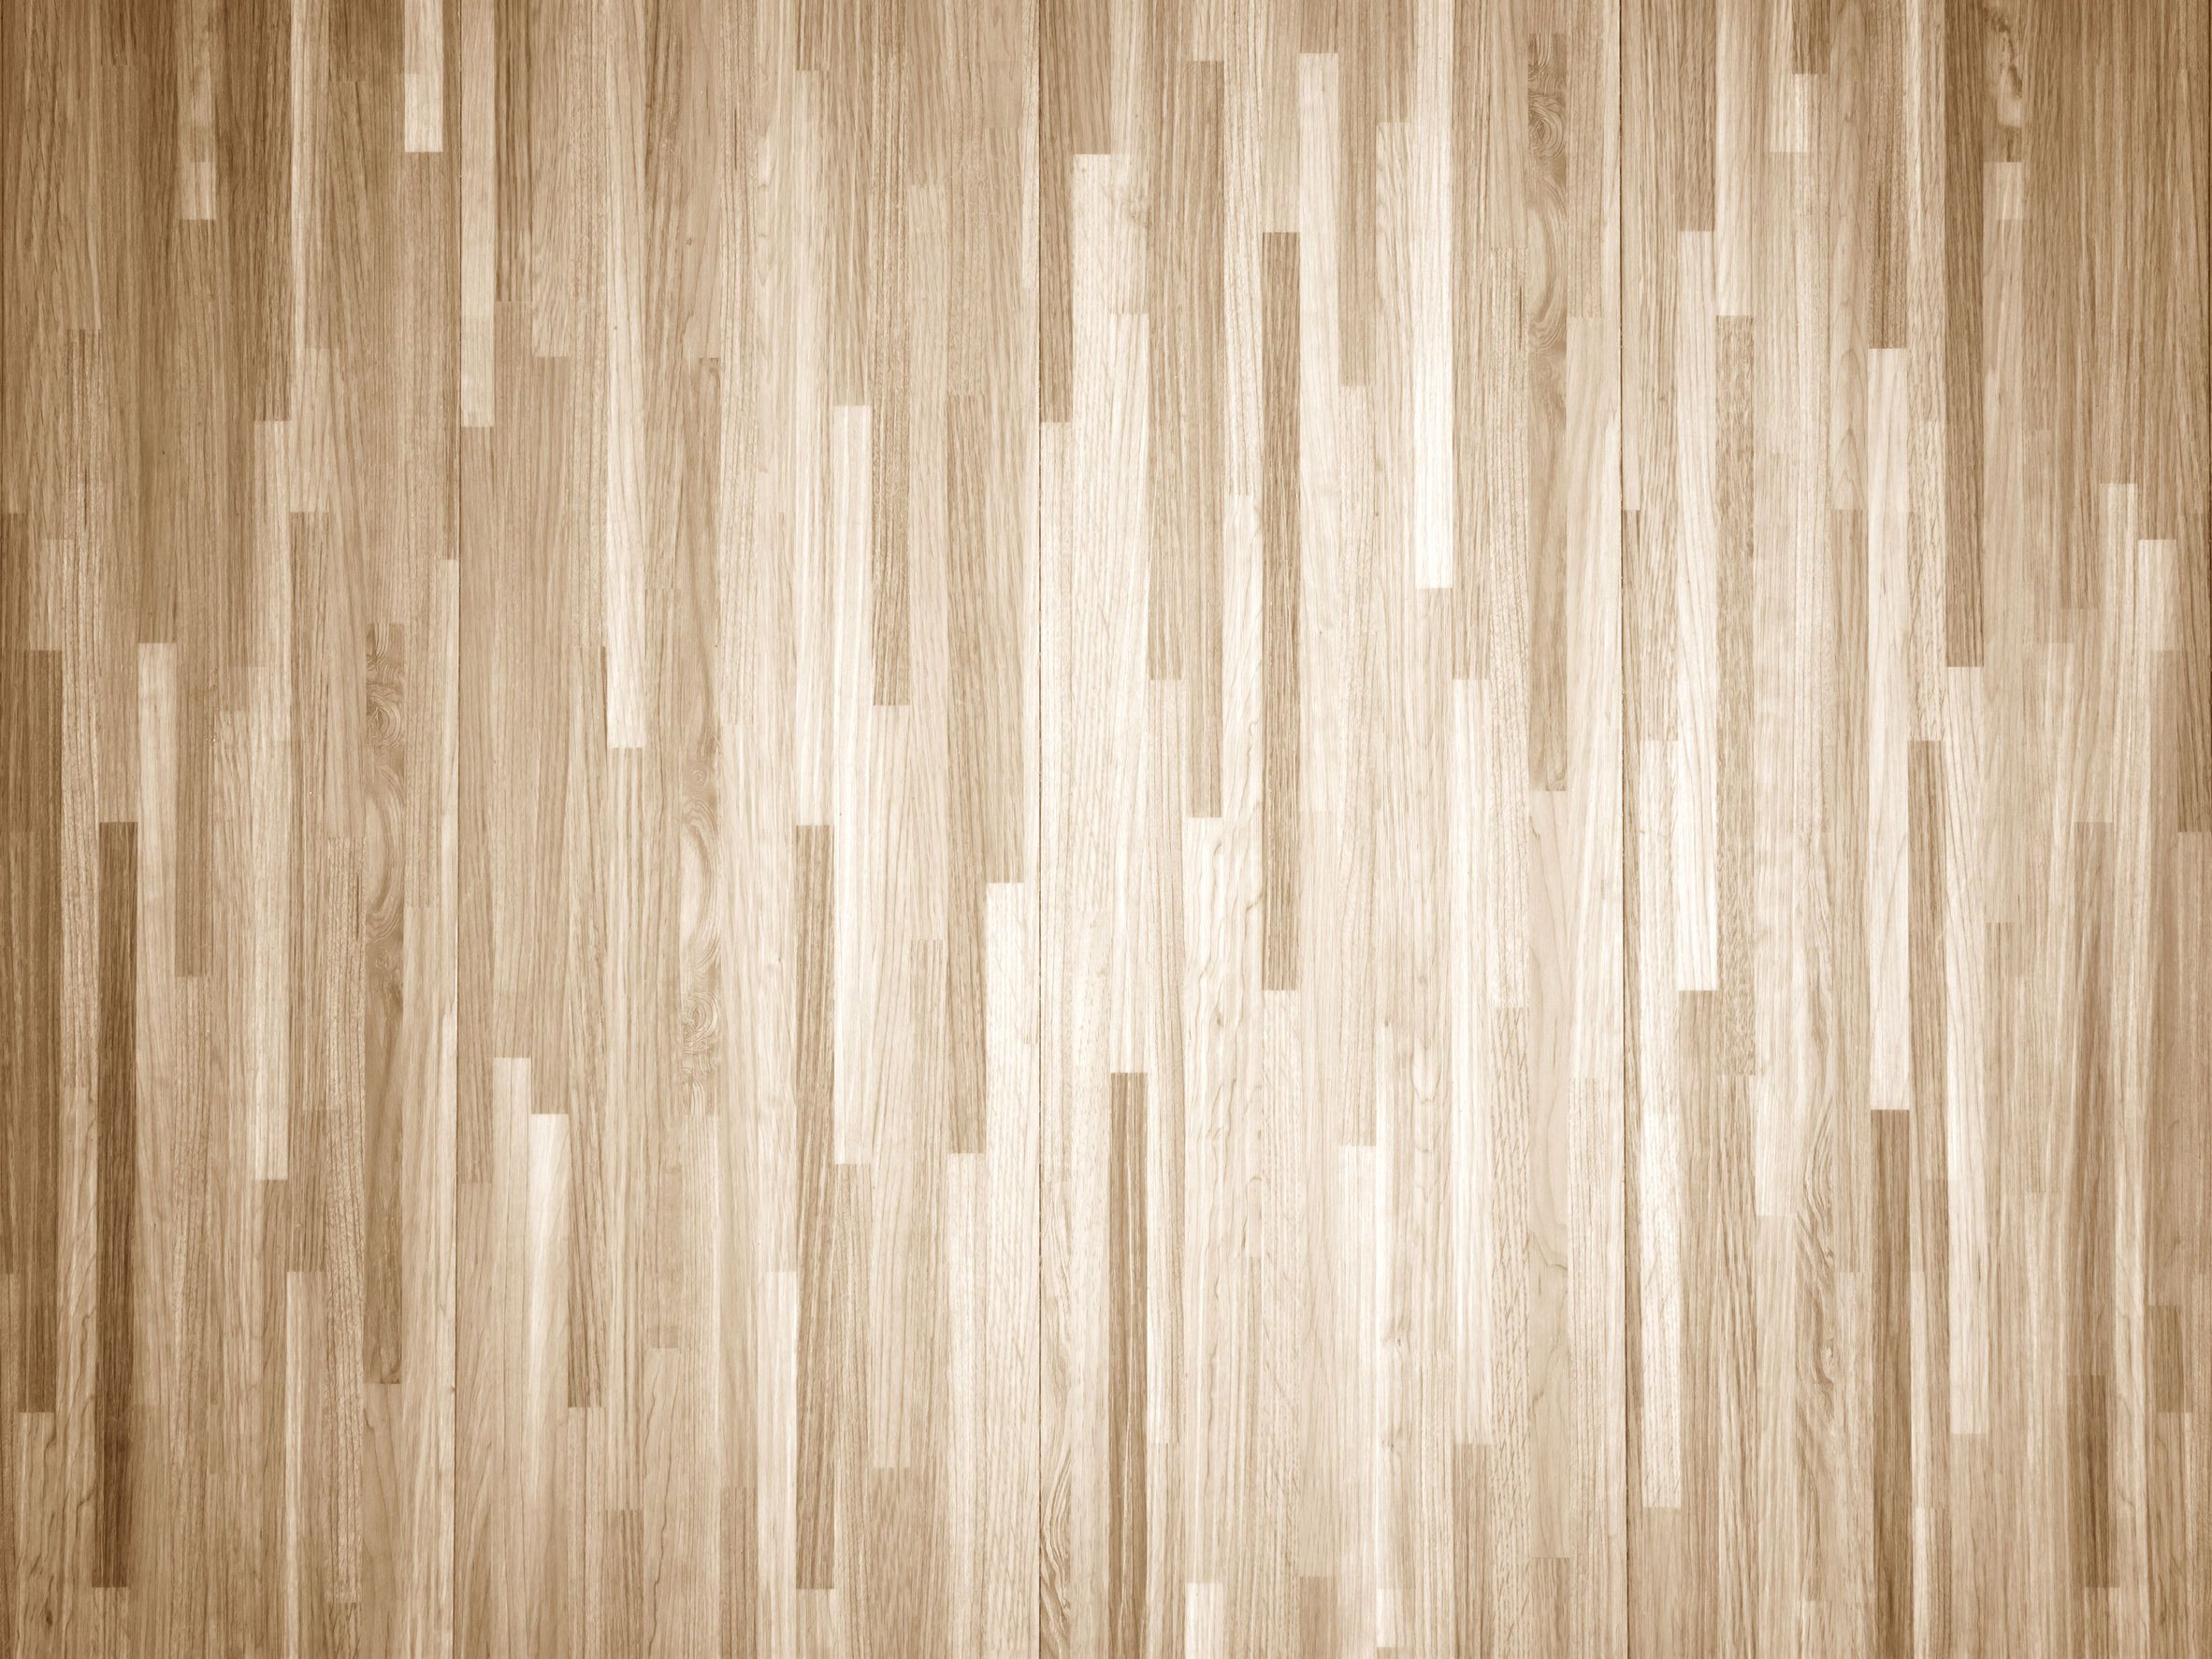 hardwood floor sanding equipment of how to chemically strip wood floors woodfloordoctor com throughout you